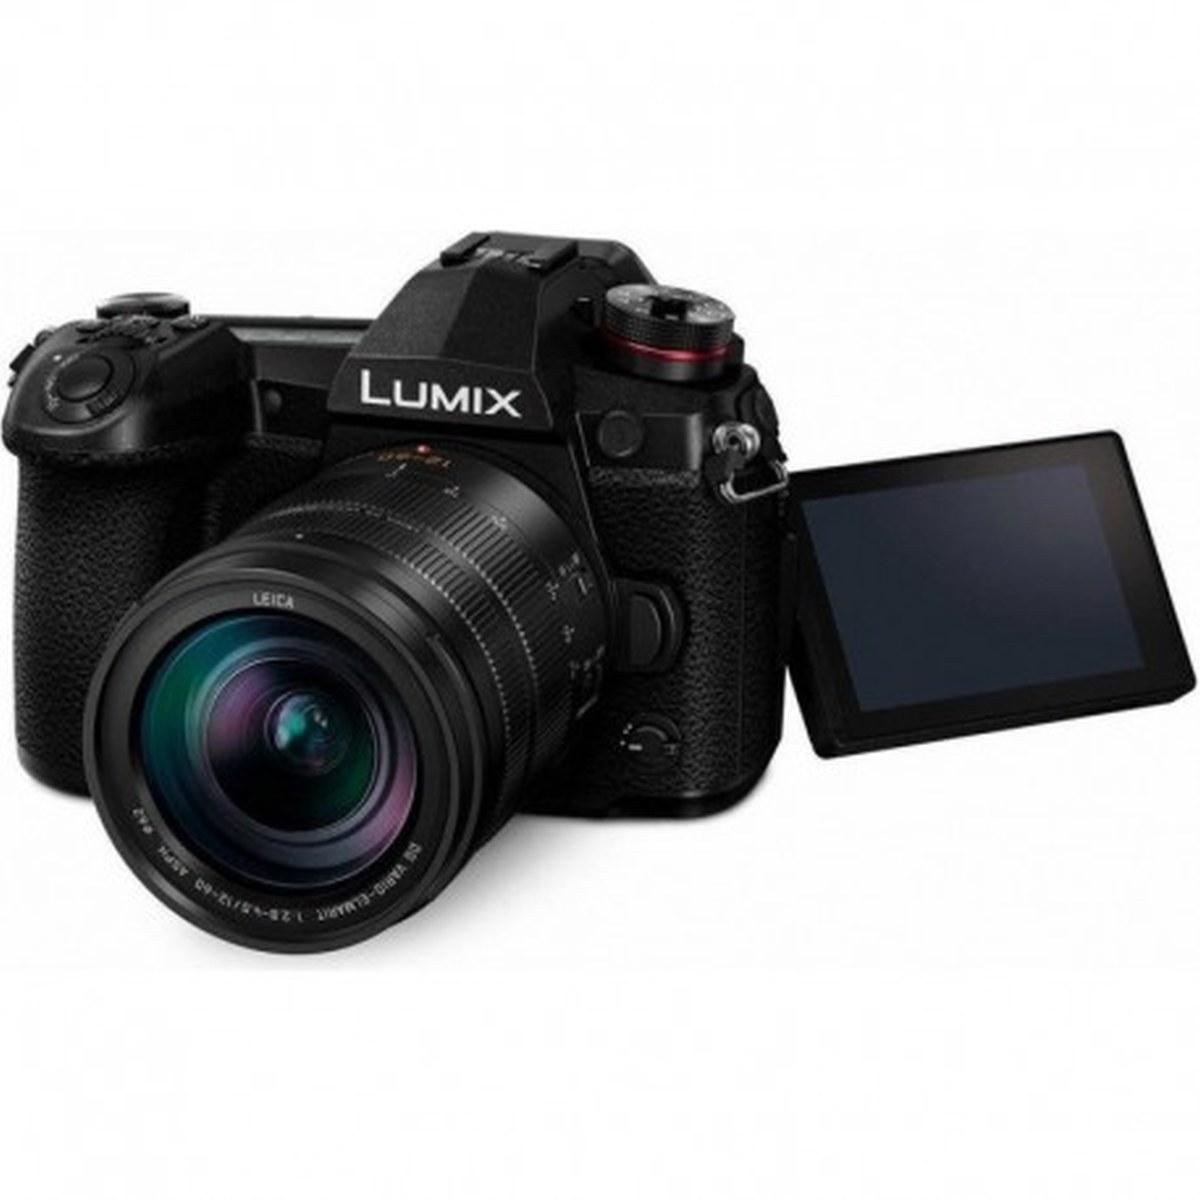 Panasonic Lumix G9 12-60mm f. 2,8-4 Leica Garanzia Fowa 4 Anni. Fotocamera Mirrorless micro 4/3 - Garanzia Fowa 4 anni